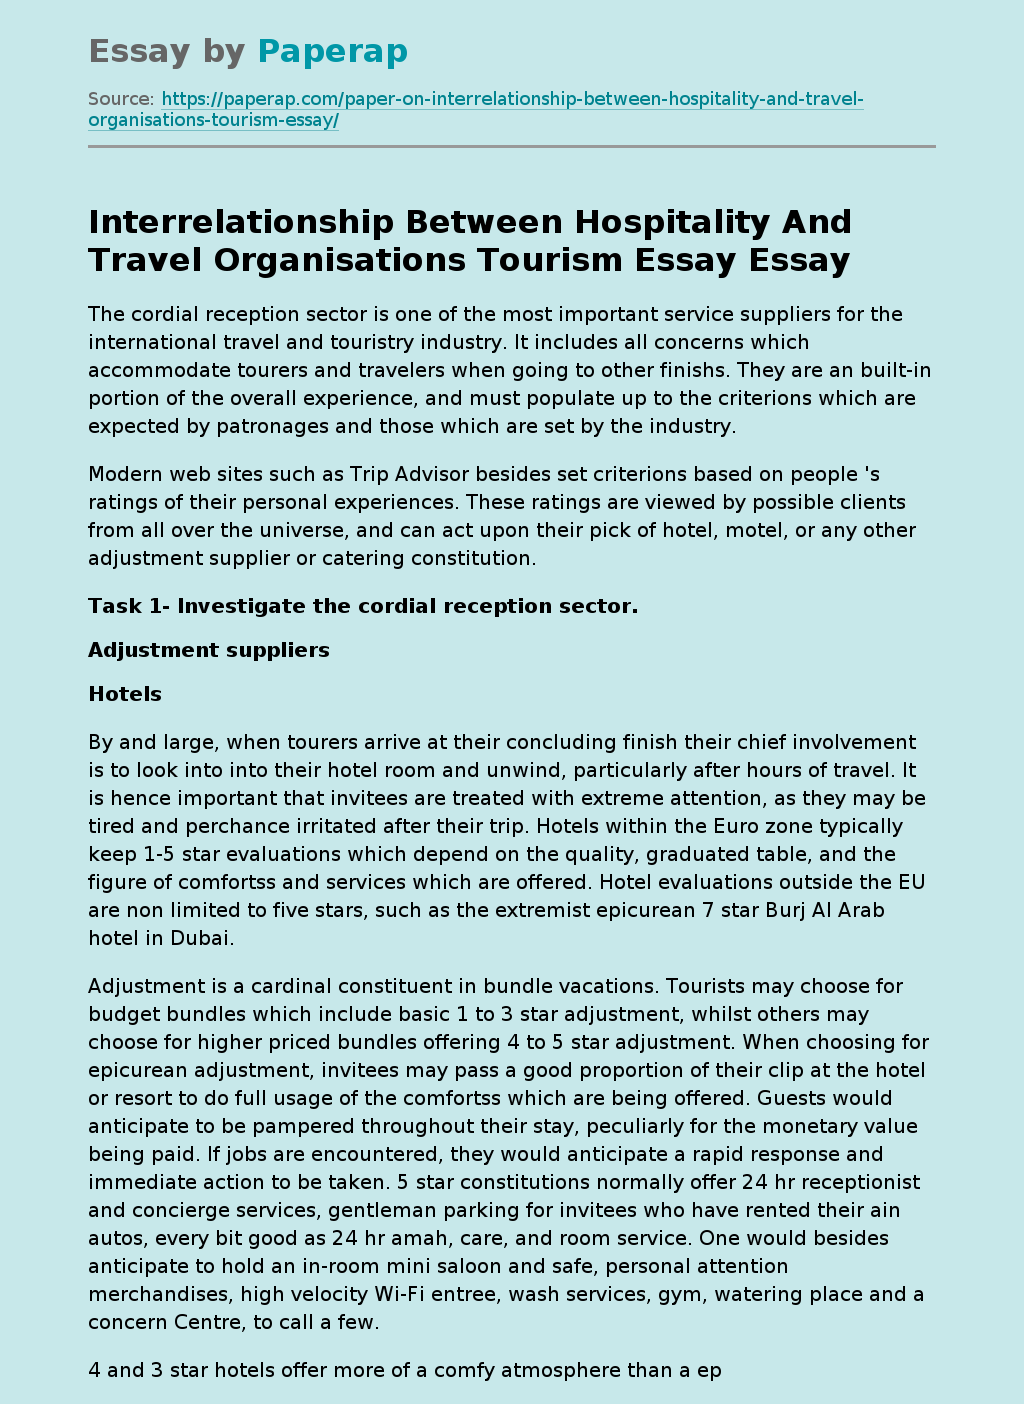 Interrelationship Between Hospitality And Travel Organisations Tourism Essay